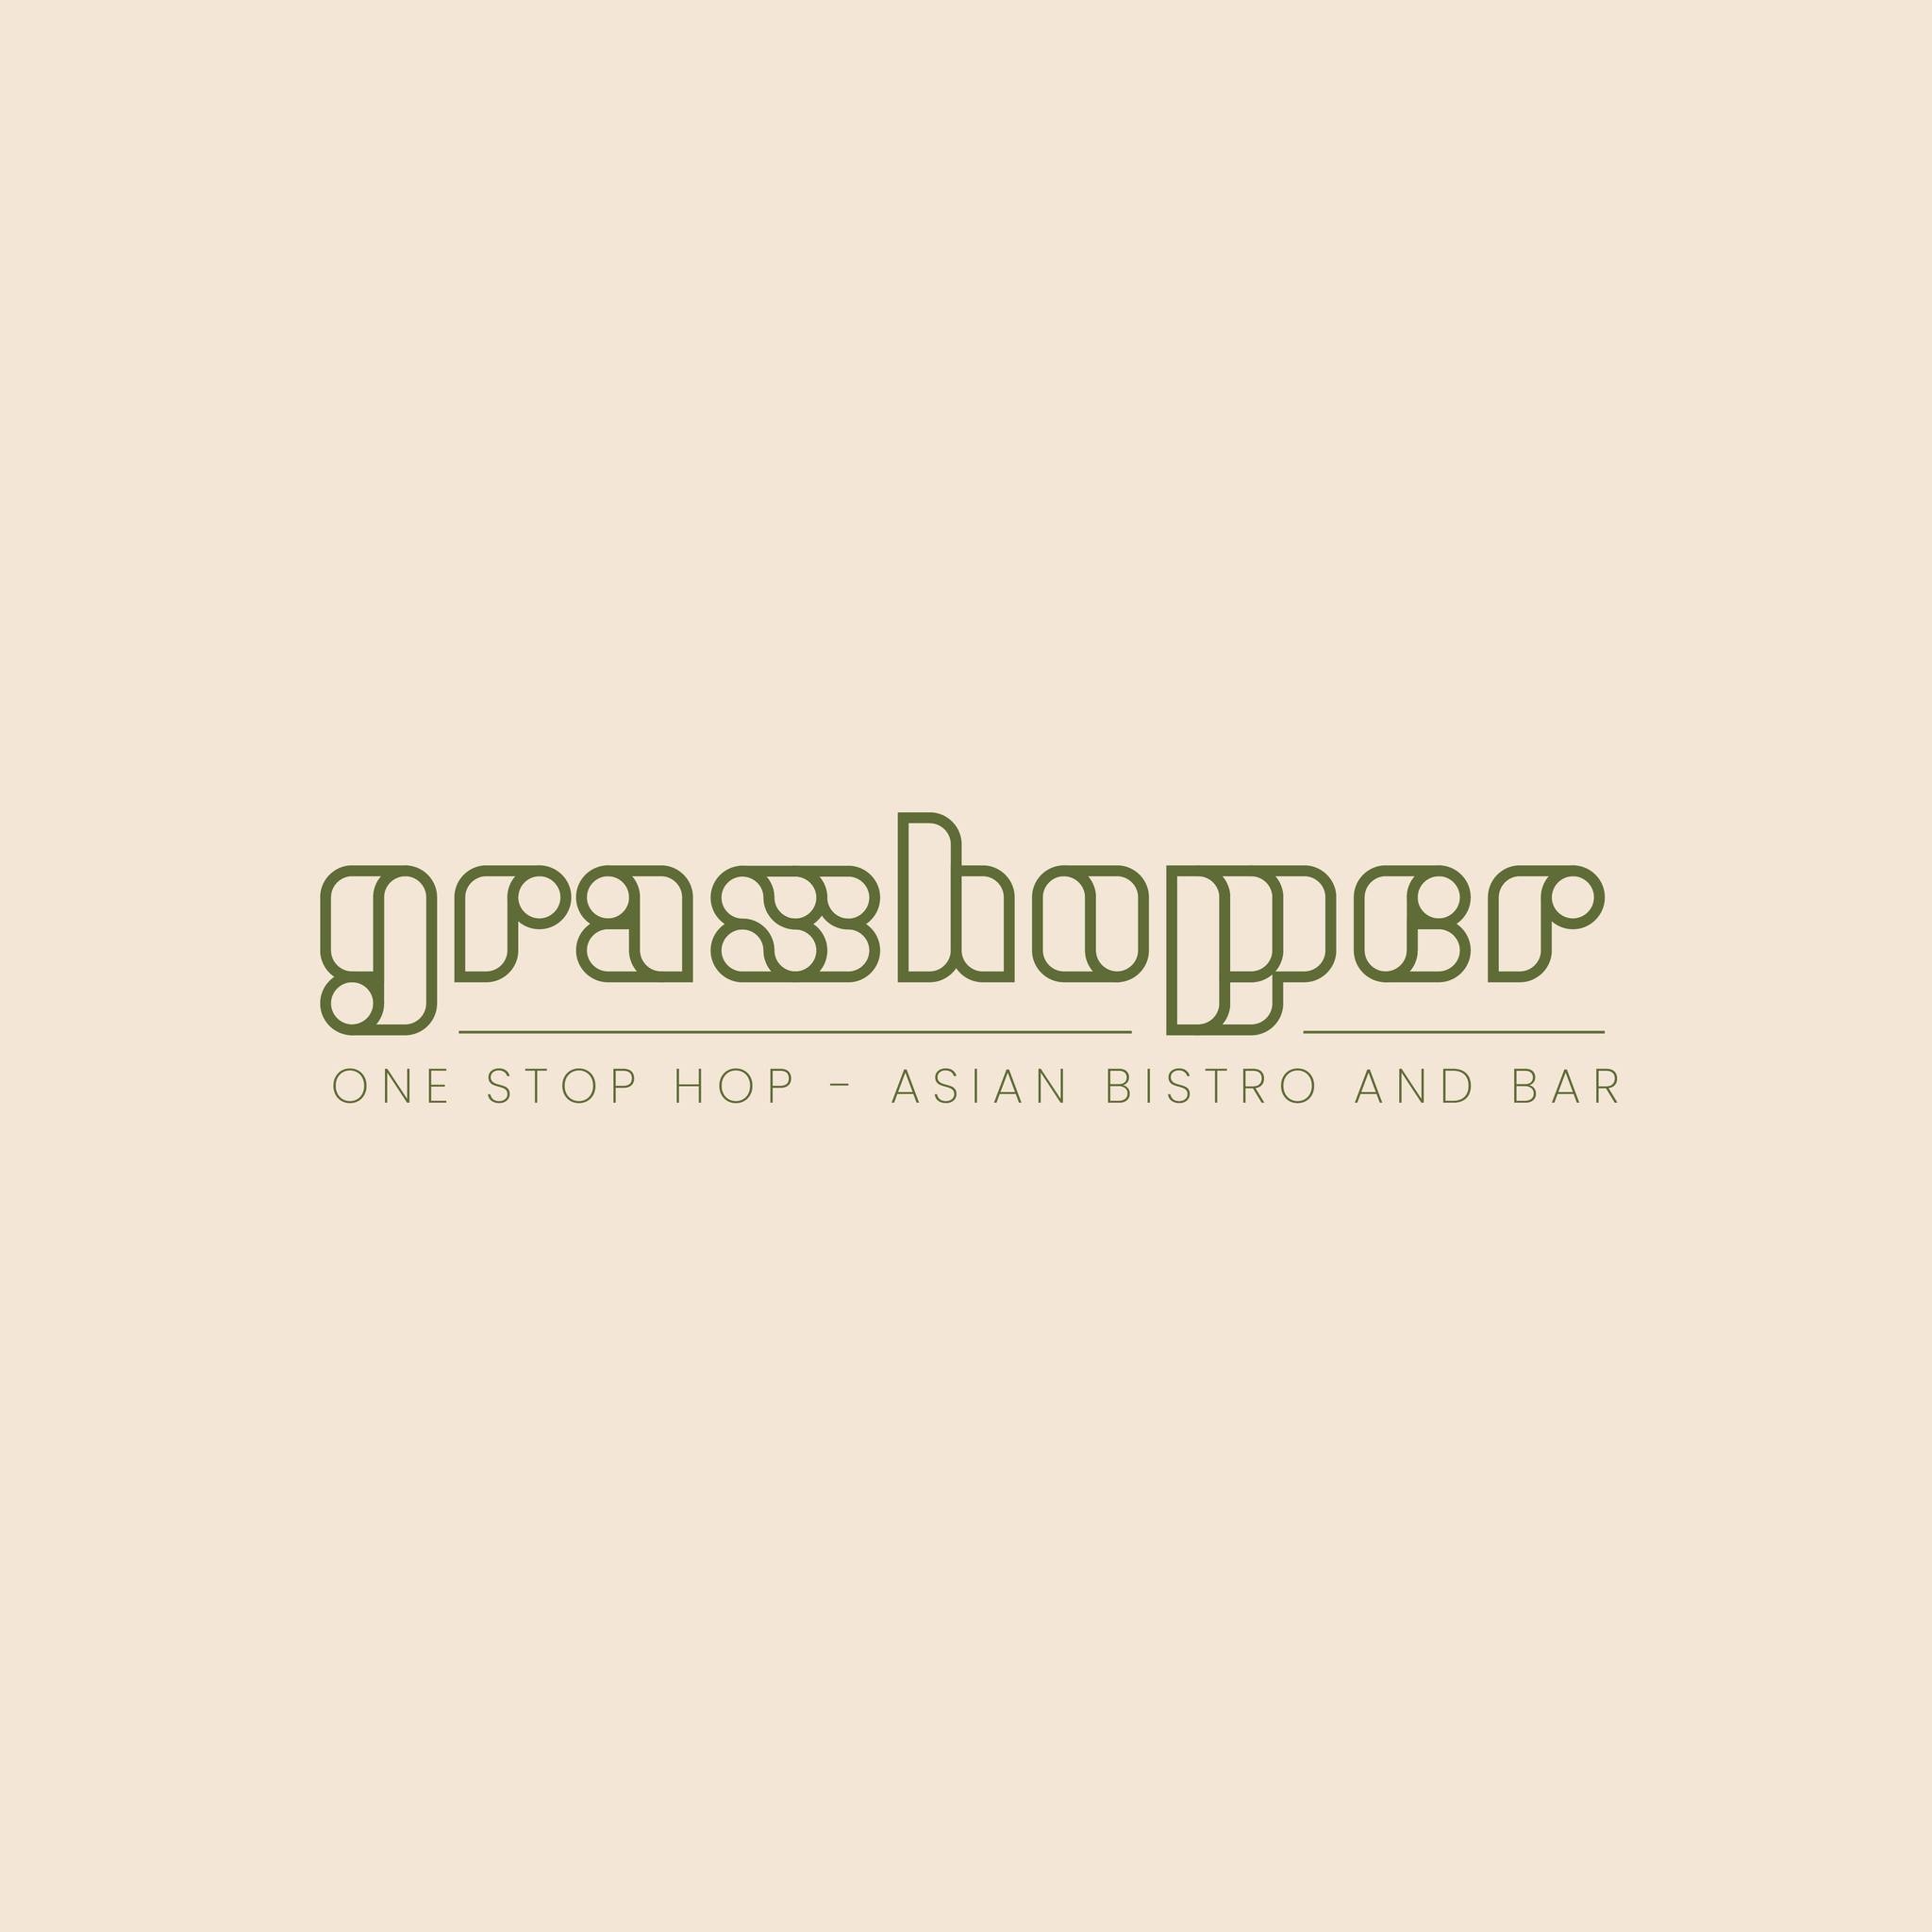 Grasshopper  Asian Bar  Bistro Experience Culinary Excell - Delhi - Delhi ID1558540